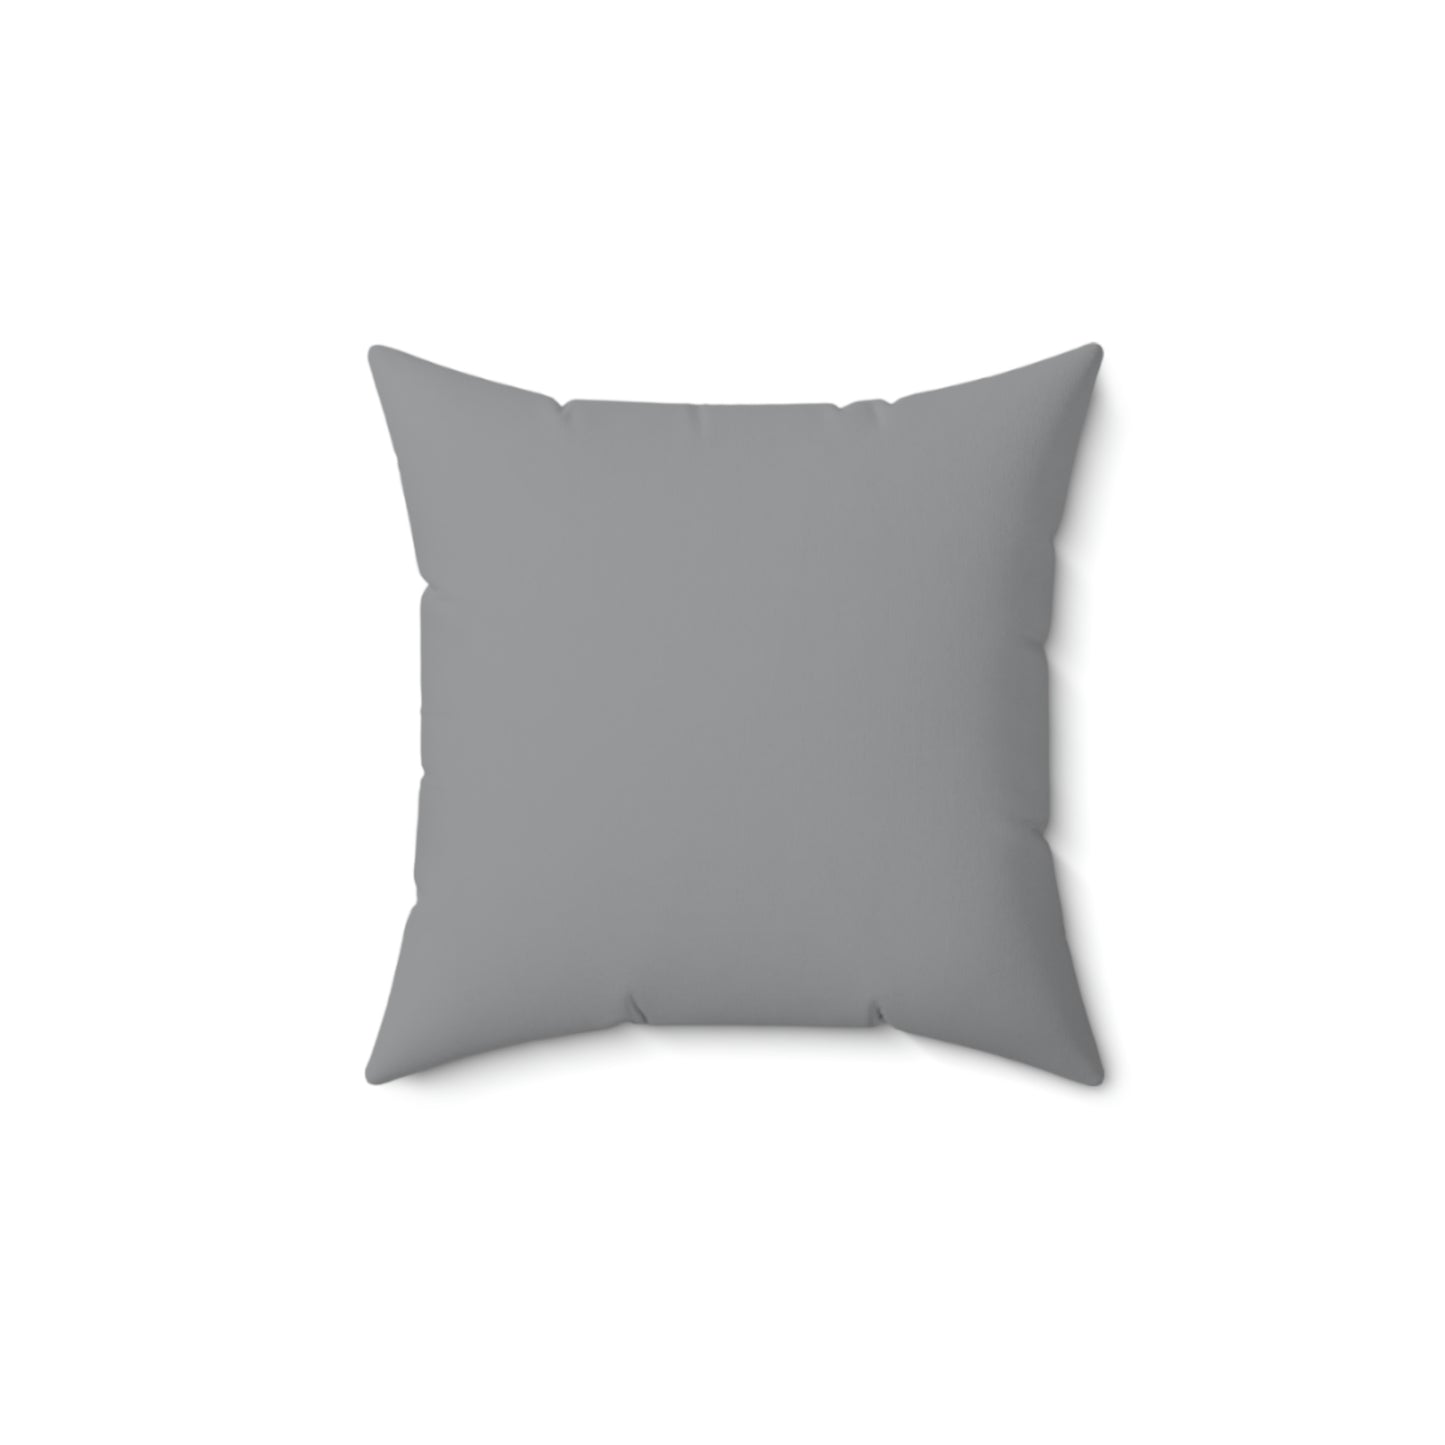 Spun Polyester Square Pillow Case “Pooh on Gray”